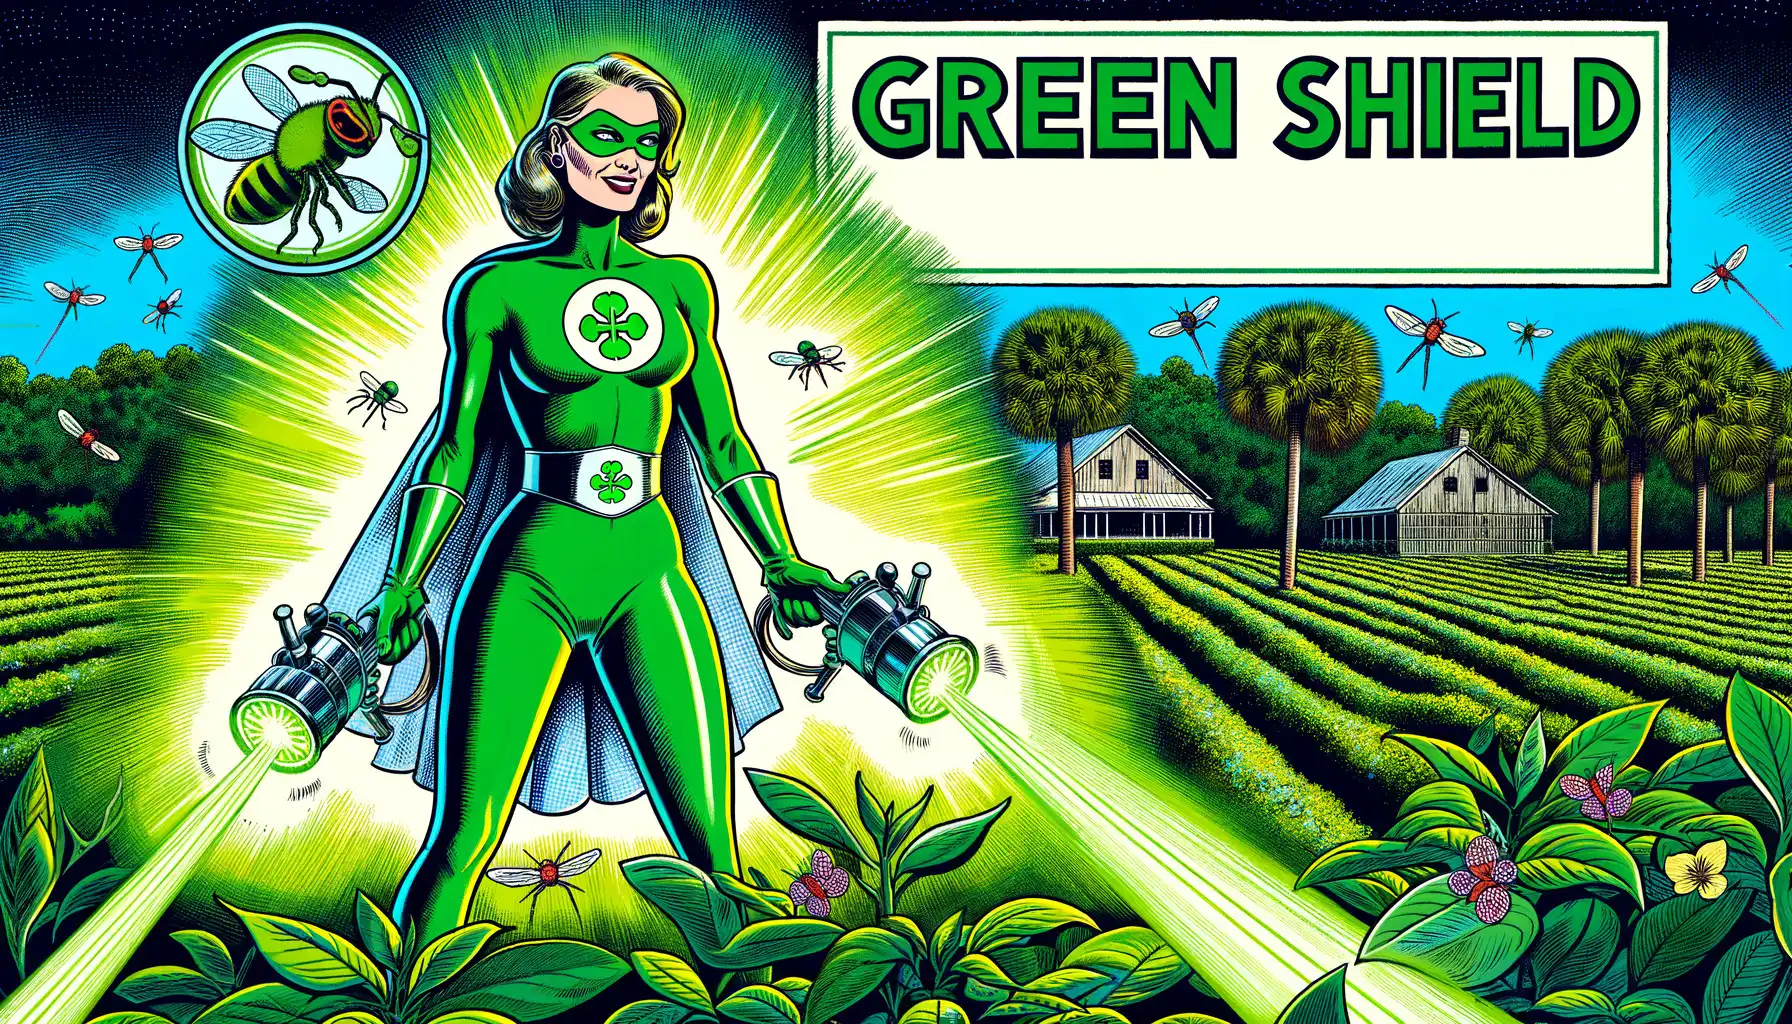 Superhero "Green Shield" with eco-friendly pest control spray.